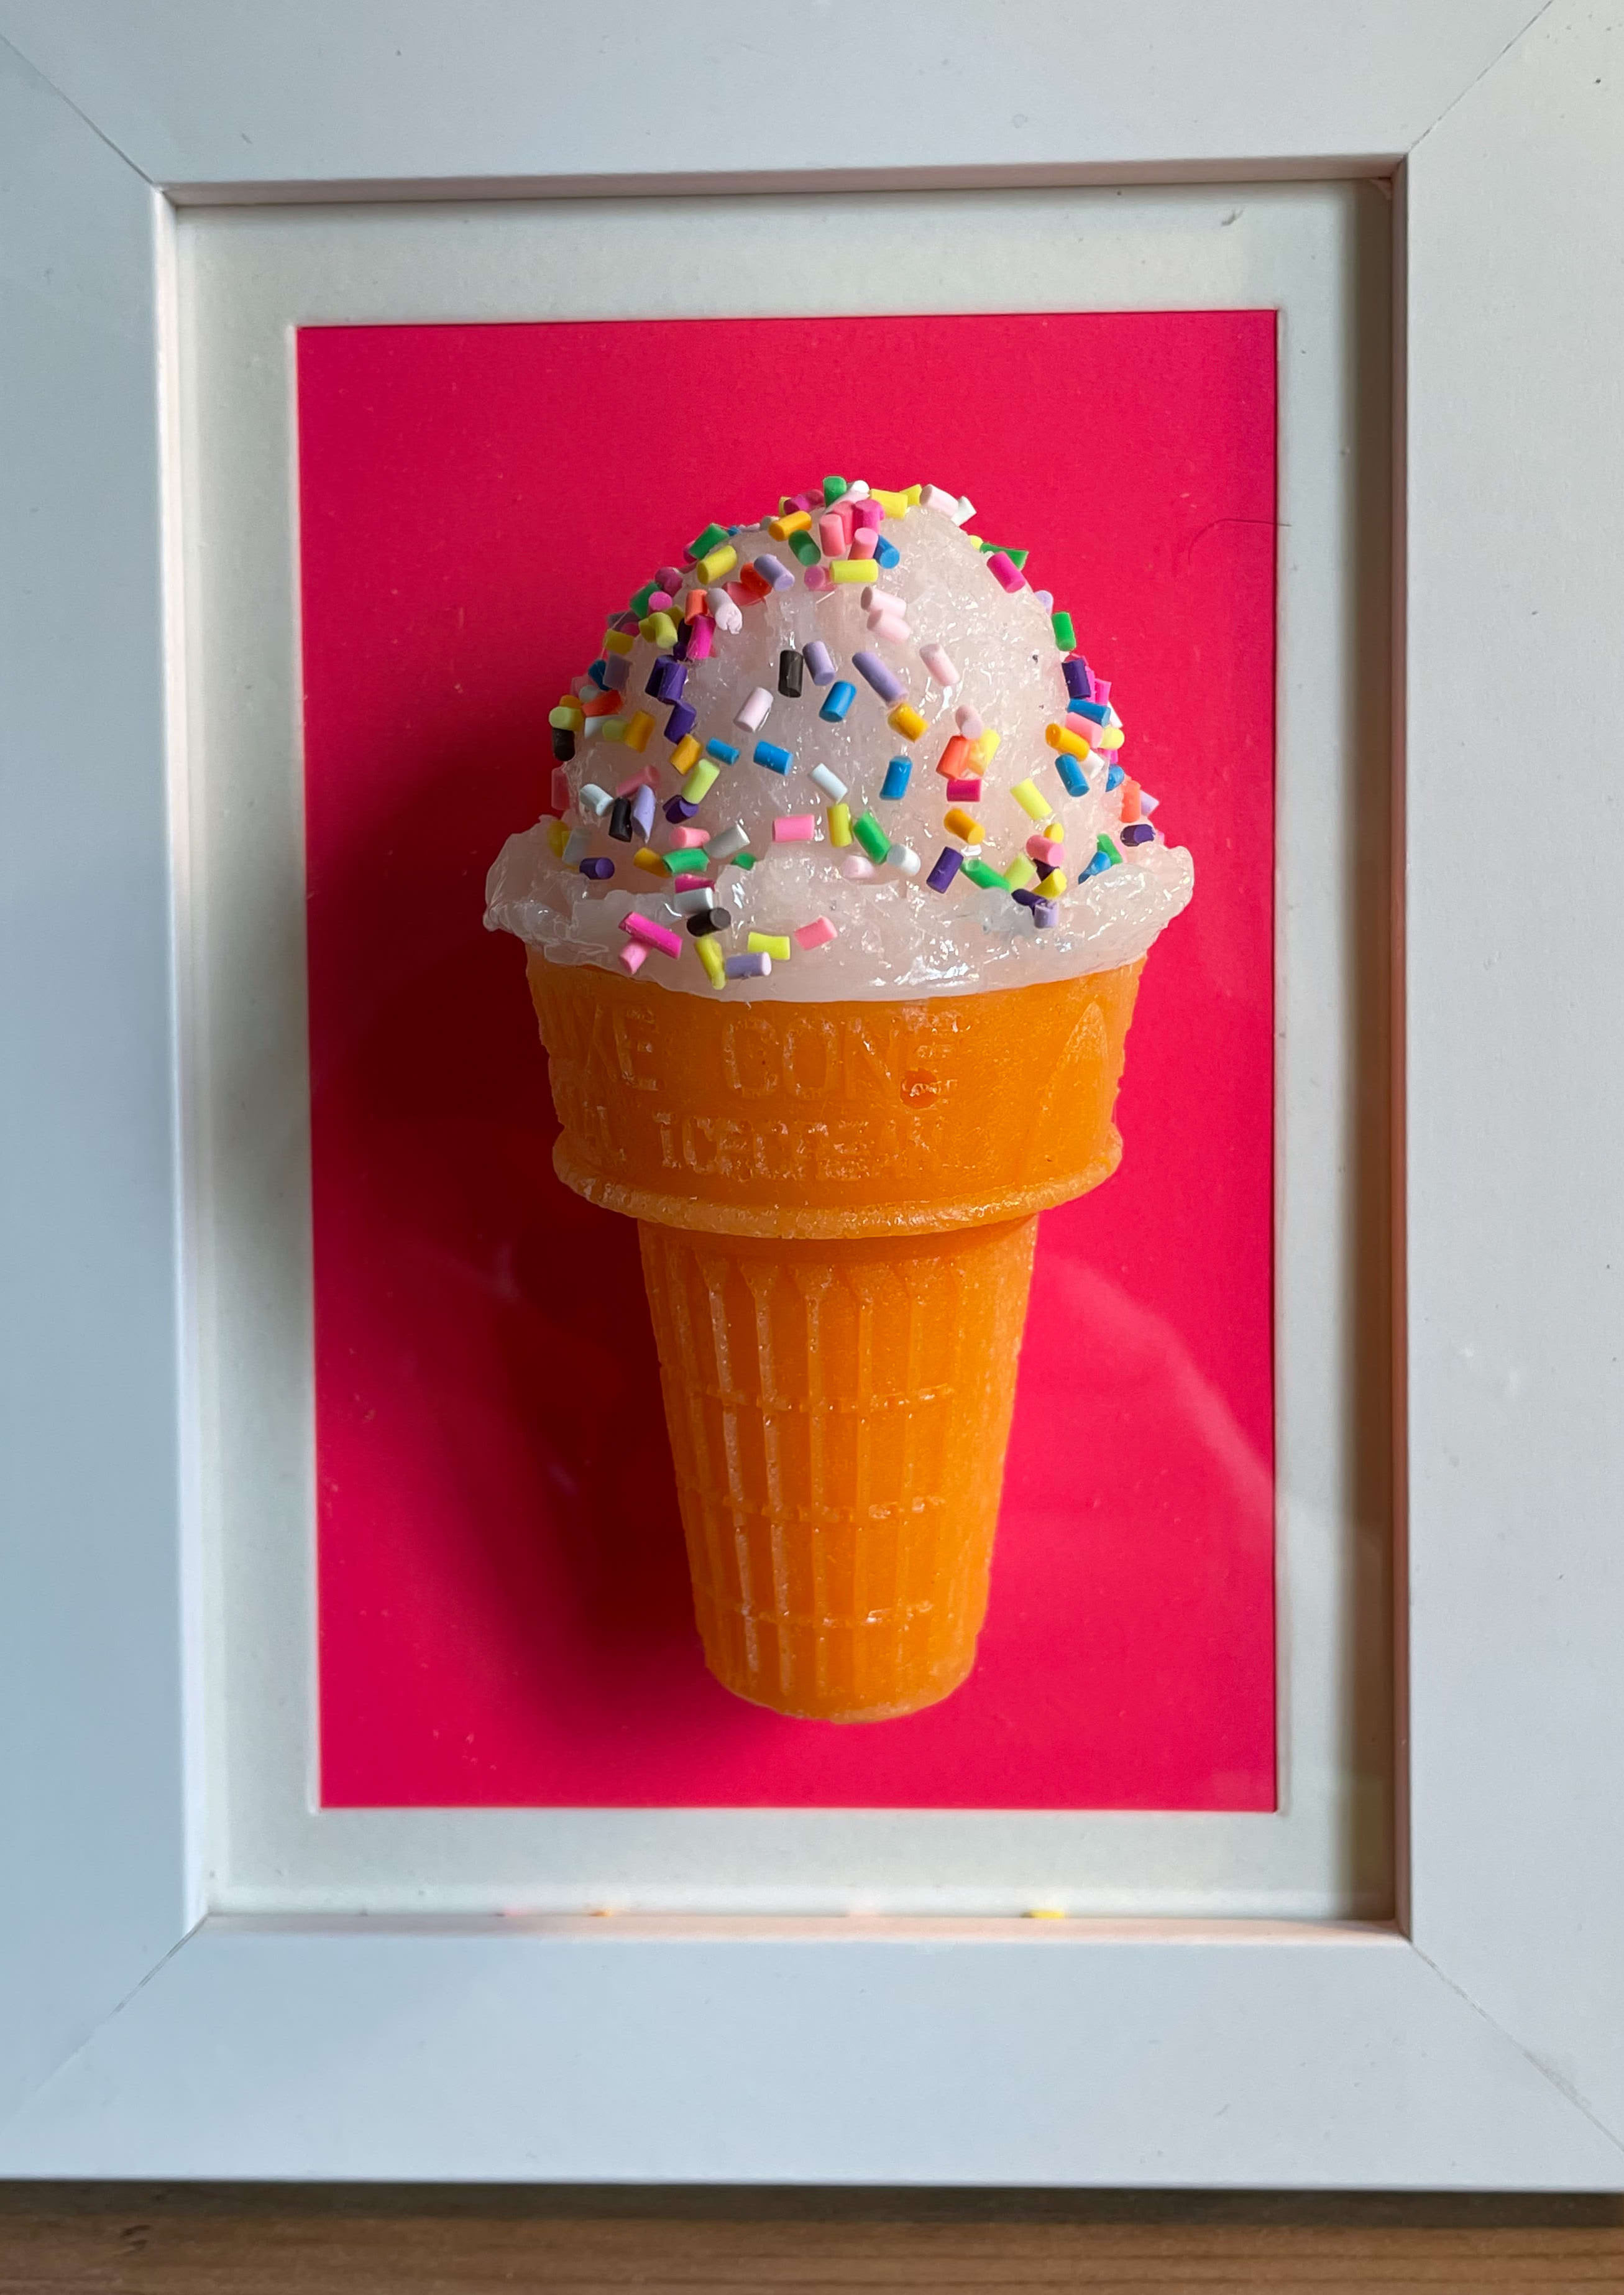 This tiny ice cream cone for a dollar. : r/mildlyinteresting